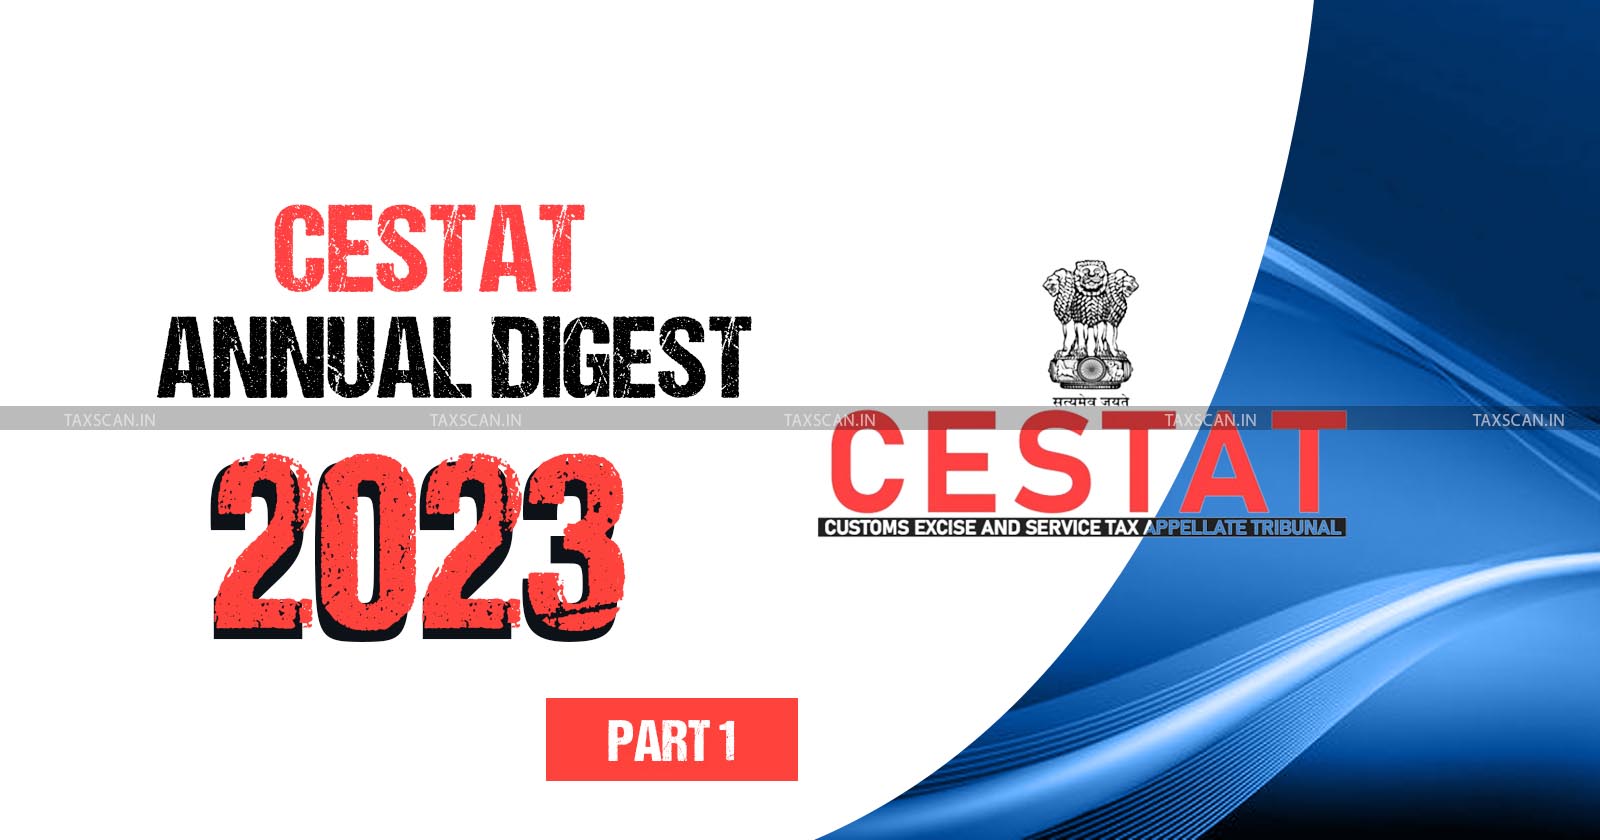 Annual Digest 2023 - CESTAT Annual Digest 2023 - cestat customs tax judgments - cestat digest - TAXSCAN